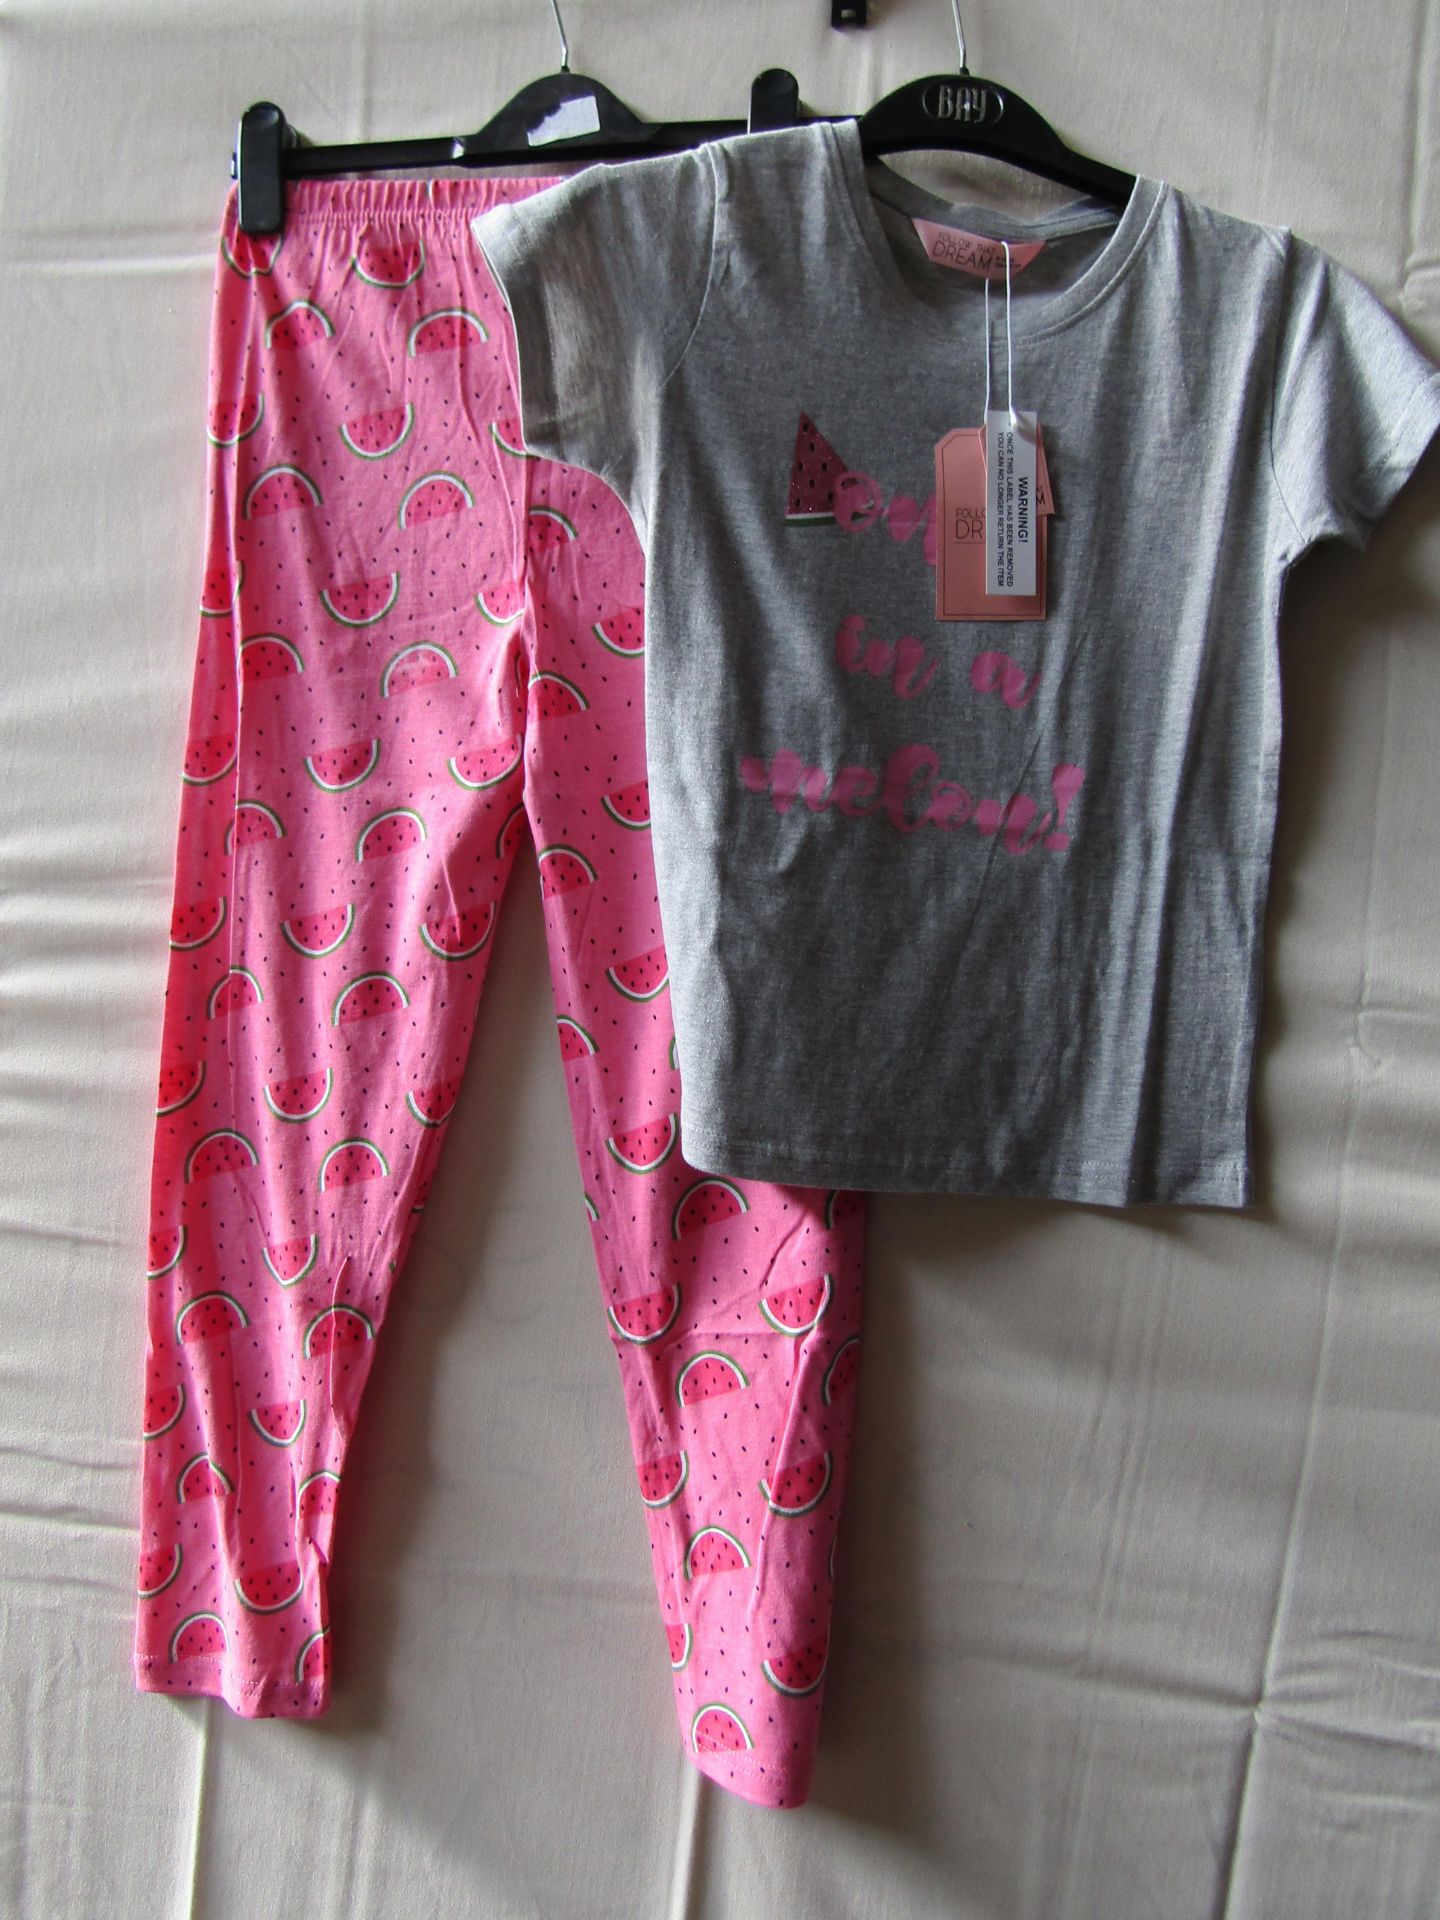 Follow That Dream Girls Jersey Fun Print Top & Leggings Pyjama Set Aged 11-12yrs New & Packaged